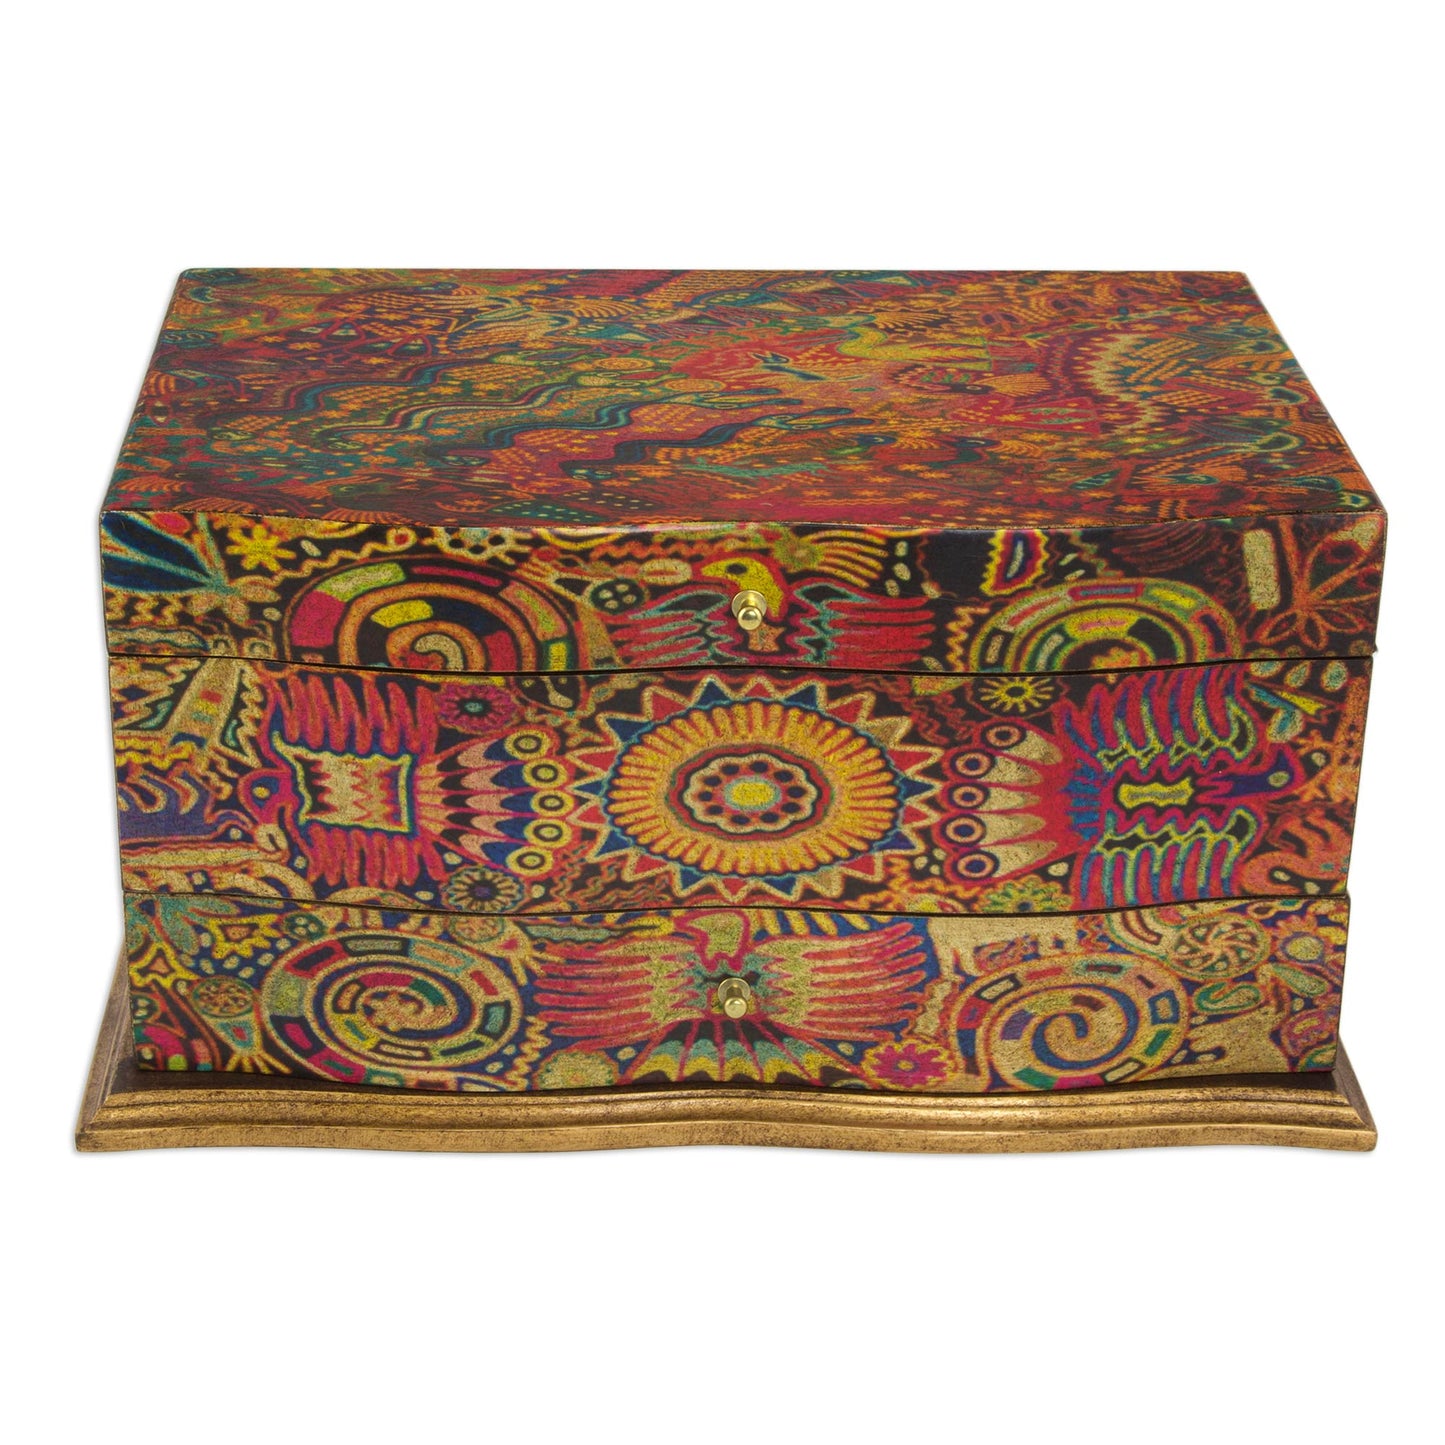 Huichol Enchantment Huichol Theme Decoupage on Pinewood Jewelry Box with 3 Decks